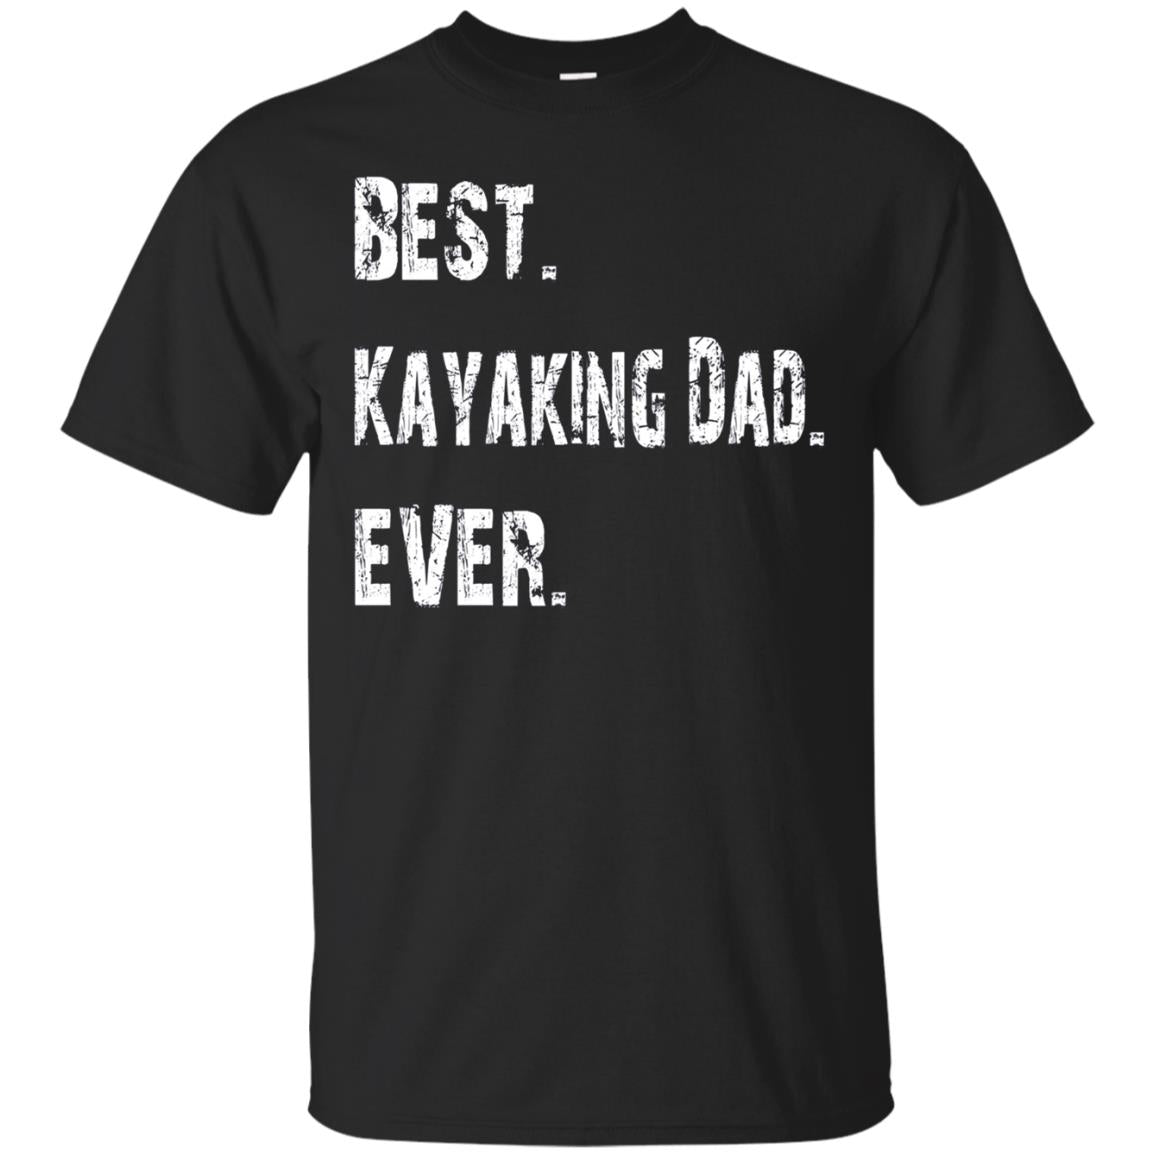 Best Kayaking Dad Shirt: Funny Kayak Canoe Row T-shirt Gift